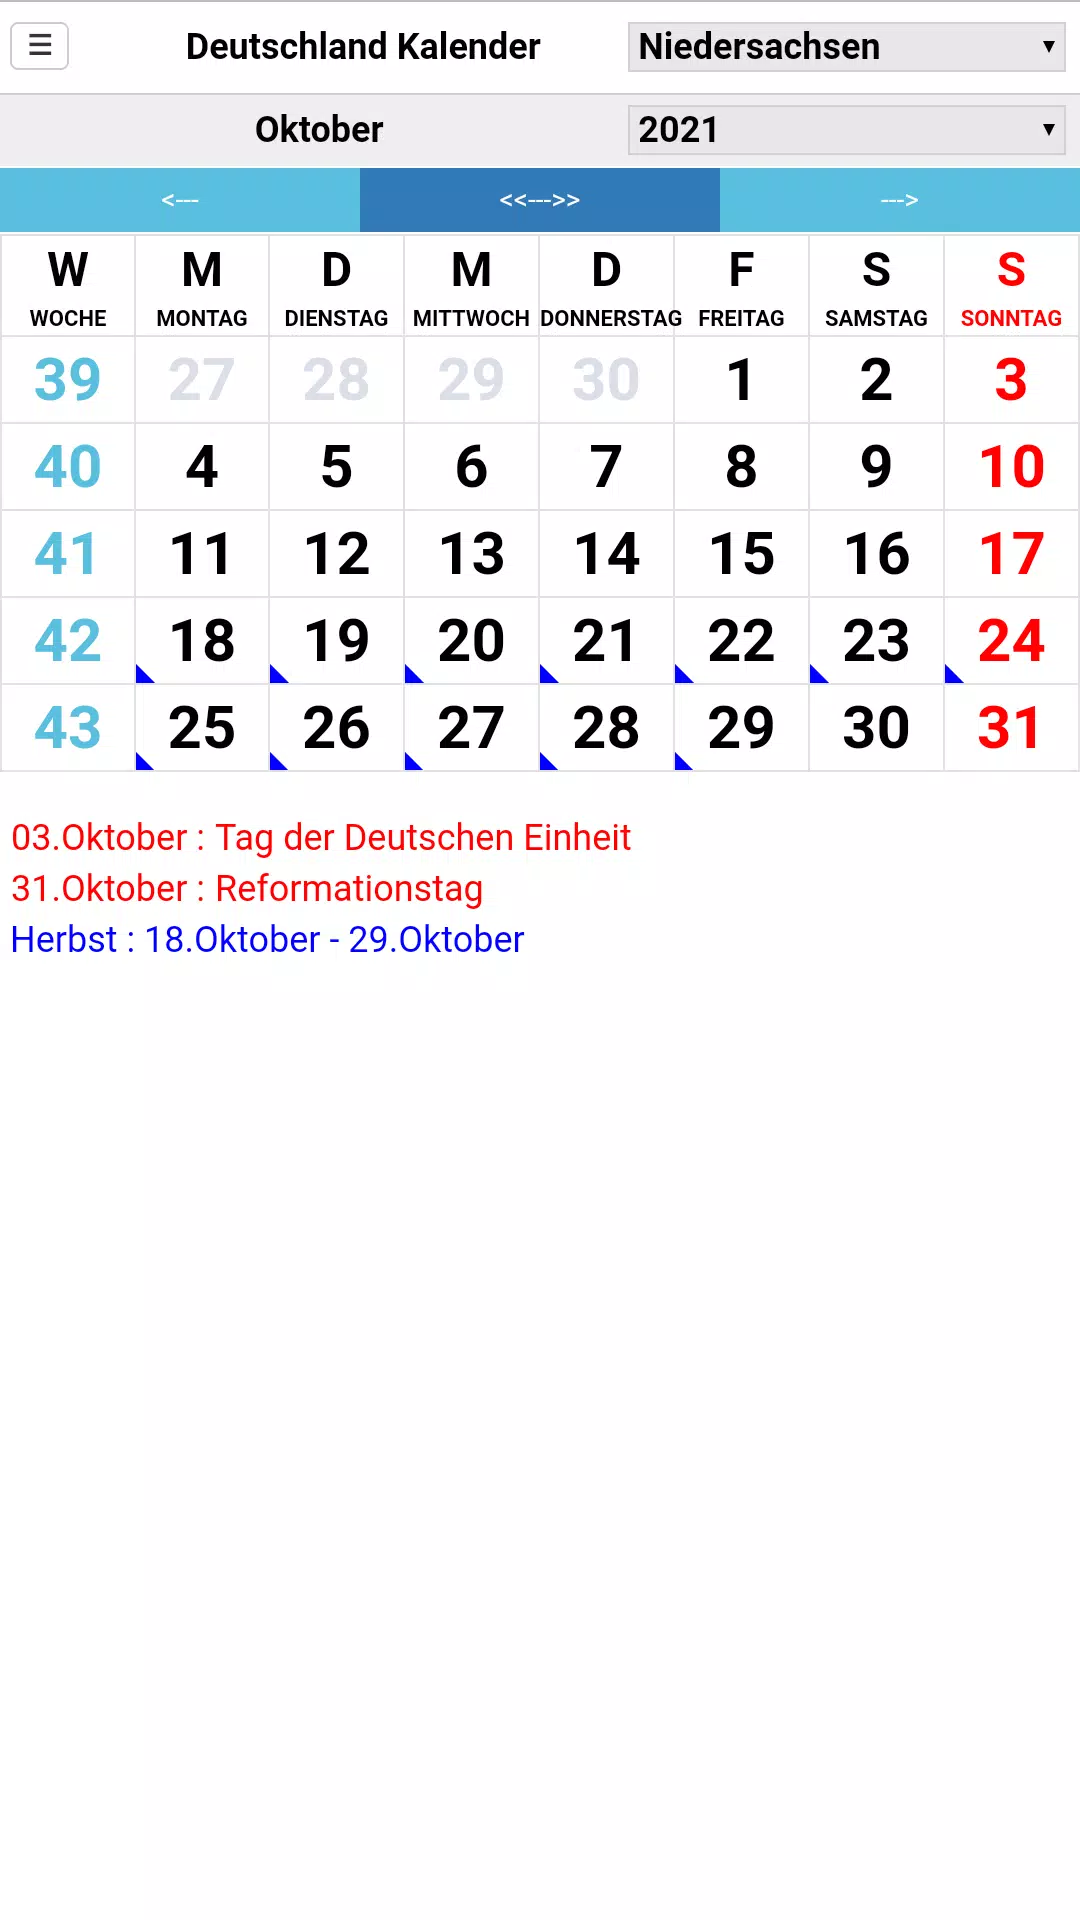 Deutschland Kalender APK for Android Download